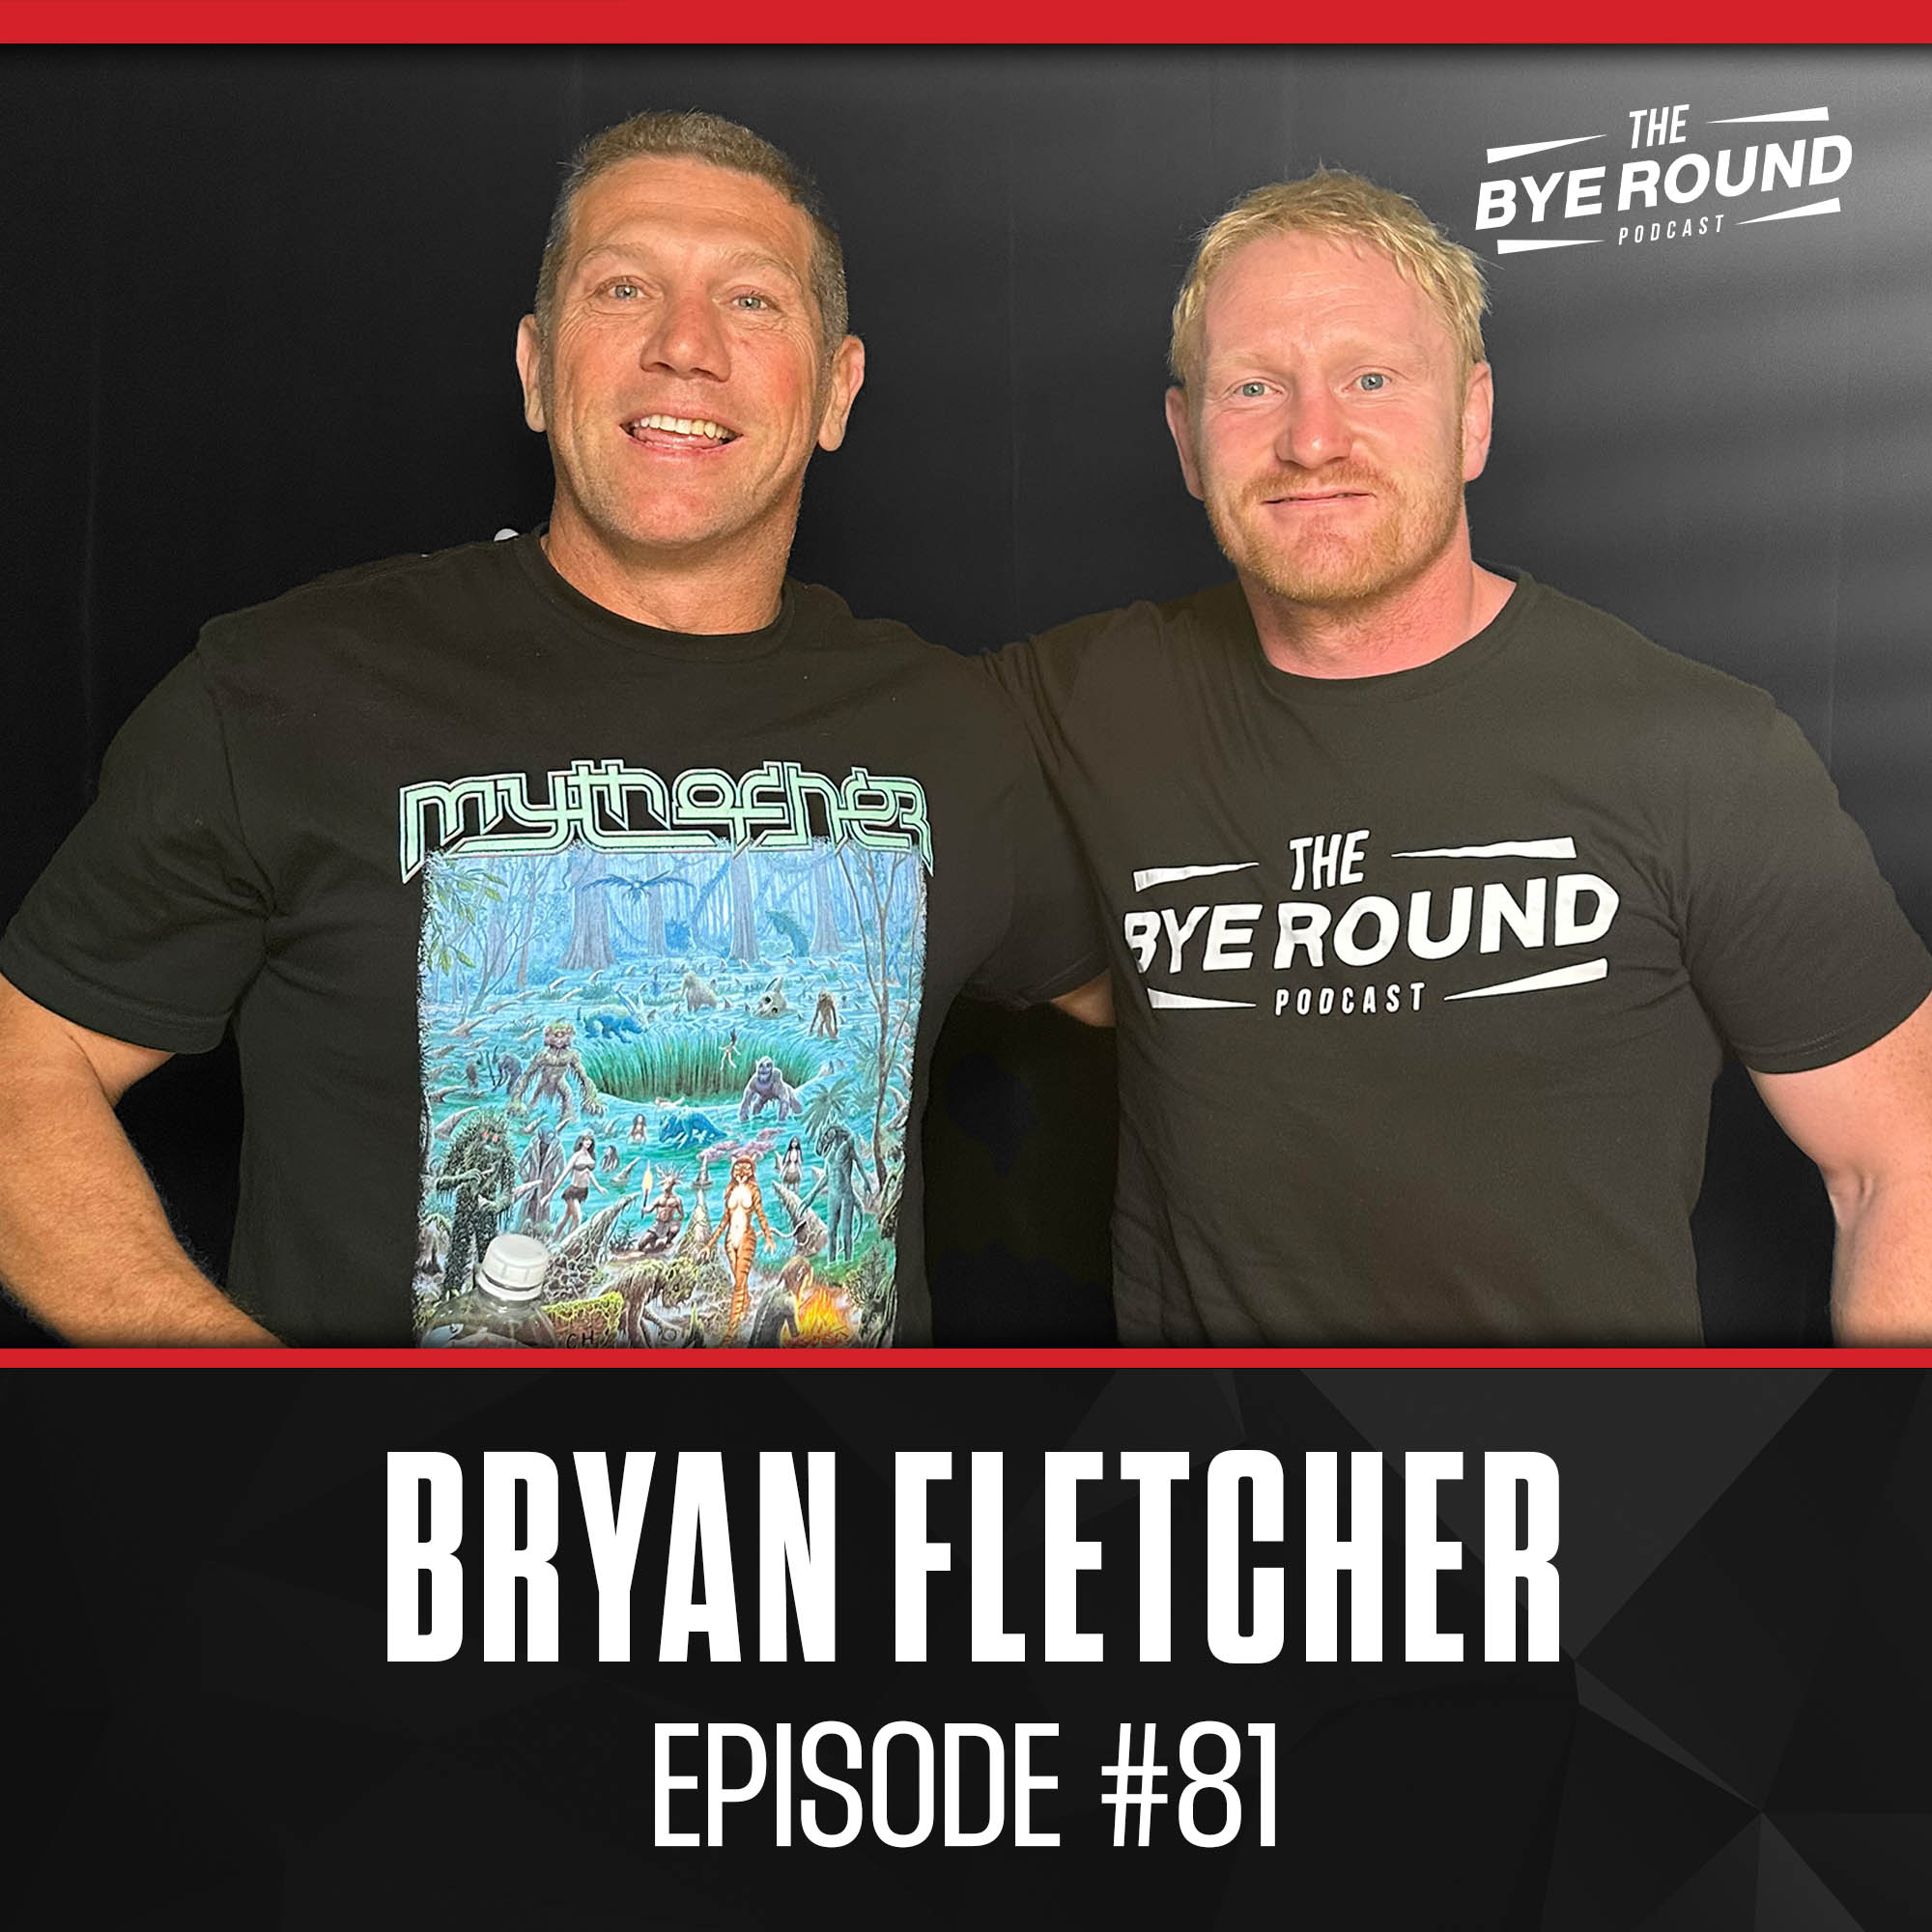 Fletch: Bryan Fletcher